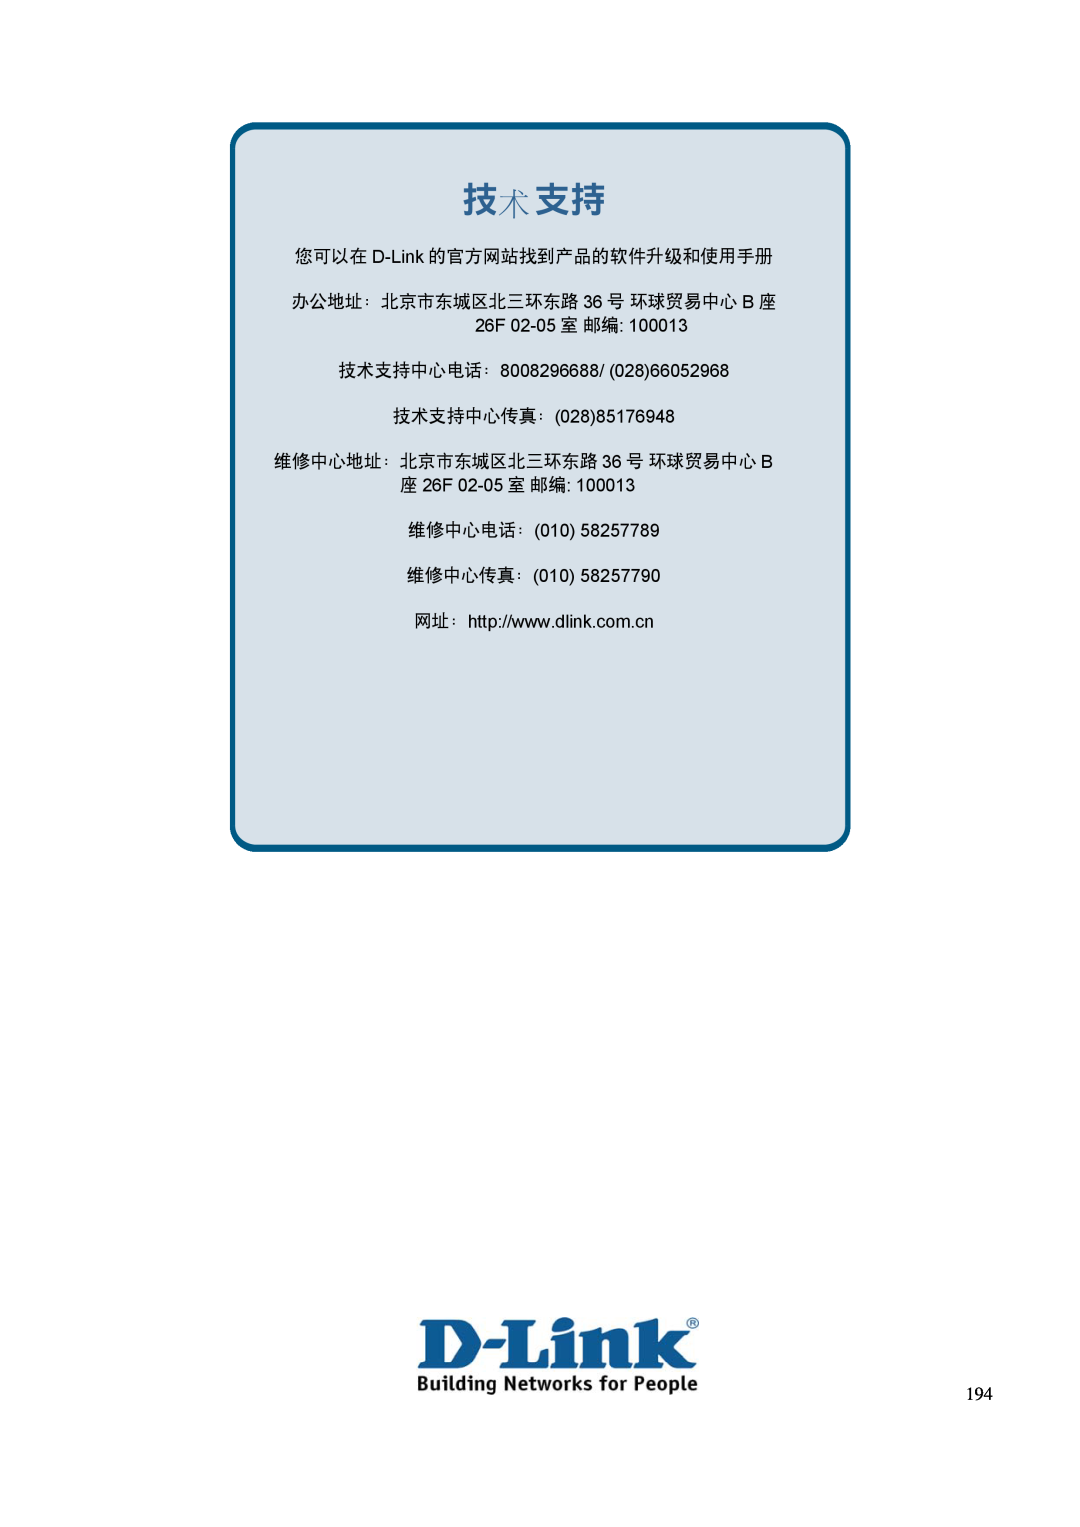 D-Link DGS-3100 user manual 技术支持, 您可以在 D-Link 的官方網站找到產品的軟件升級和使用手冊, 办公地址：北京市东城区北三环东路 36 号 环球贸易中心 B 座 26F 02-05 室 邮编 